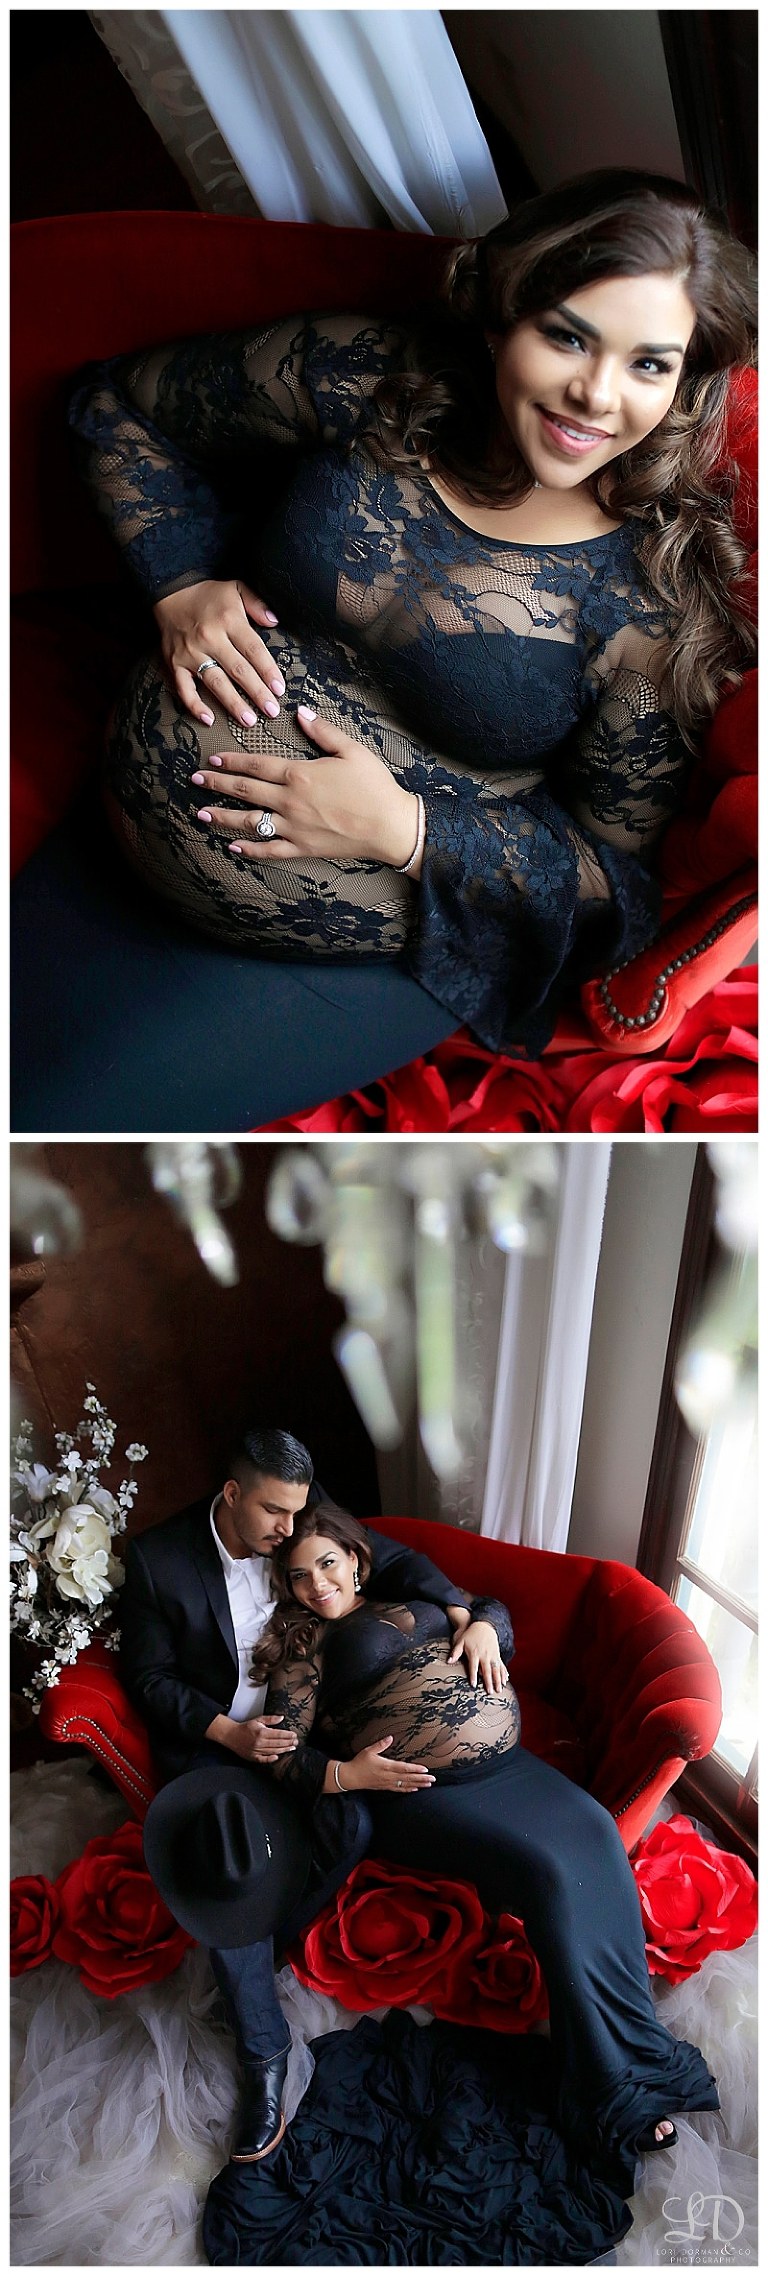 sweet maternity photoshoot-lori dorman photography-maternity boudoir-professional photographer_5233.jpg